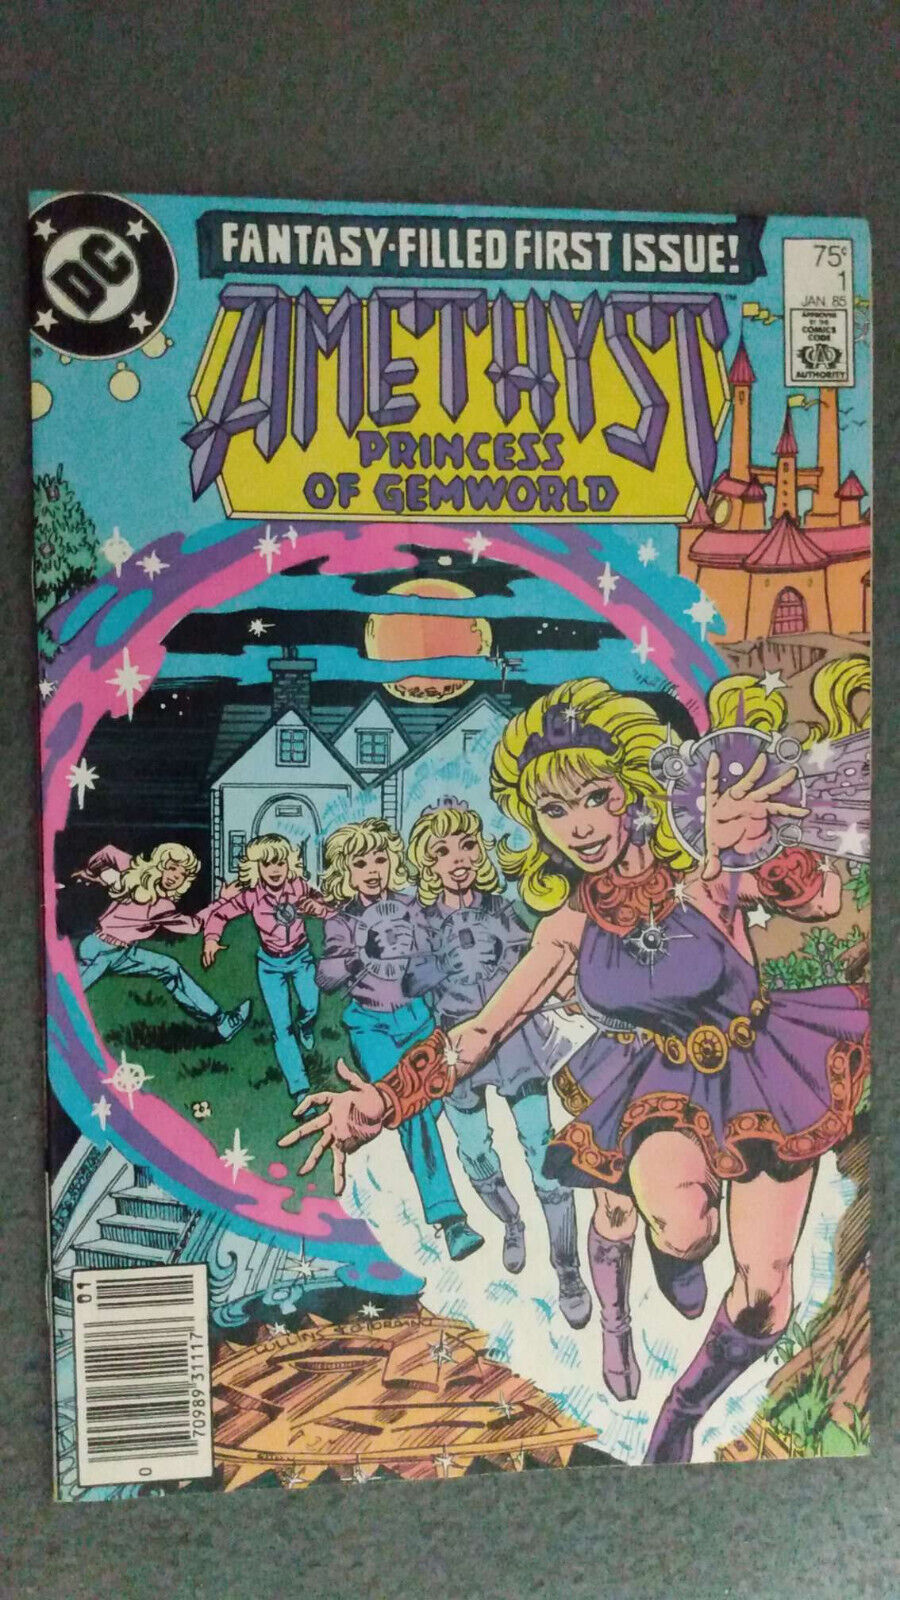 Amethyst Princess of Gemworld #1 (1985) VG-FN DC Comics $4 Flat Rate Comb Ship